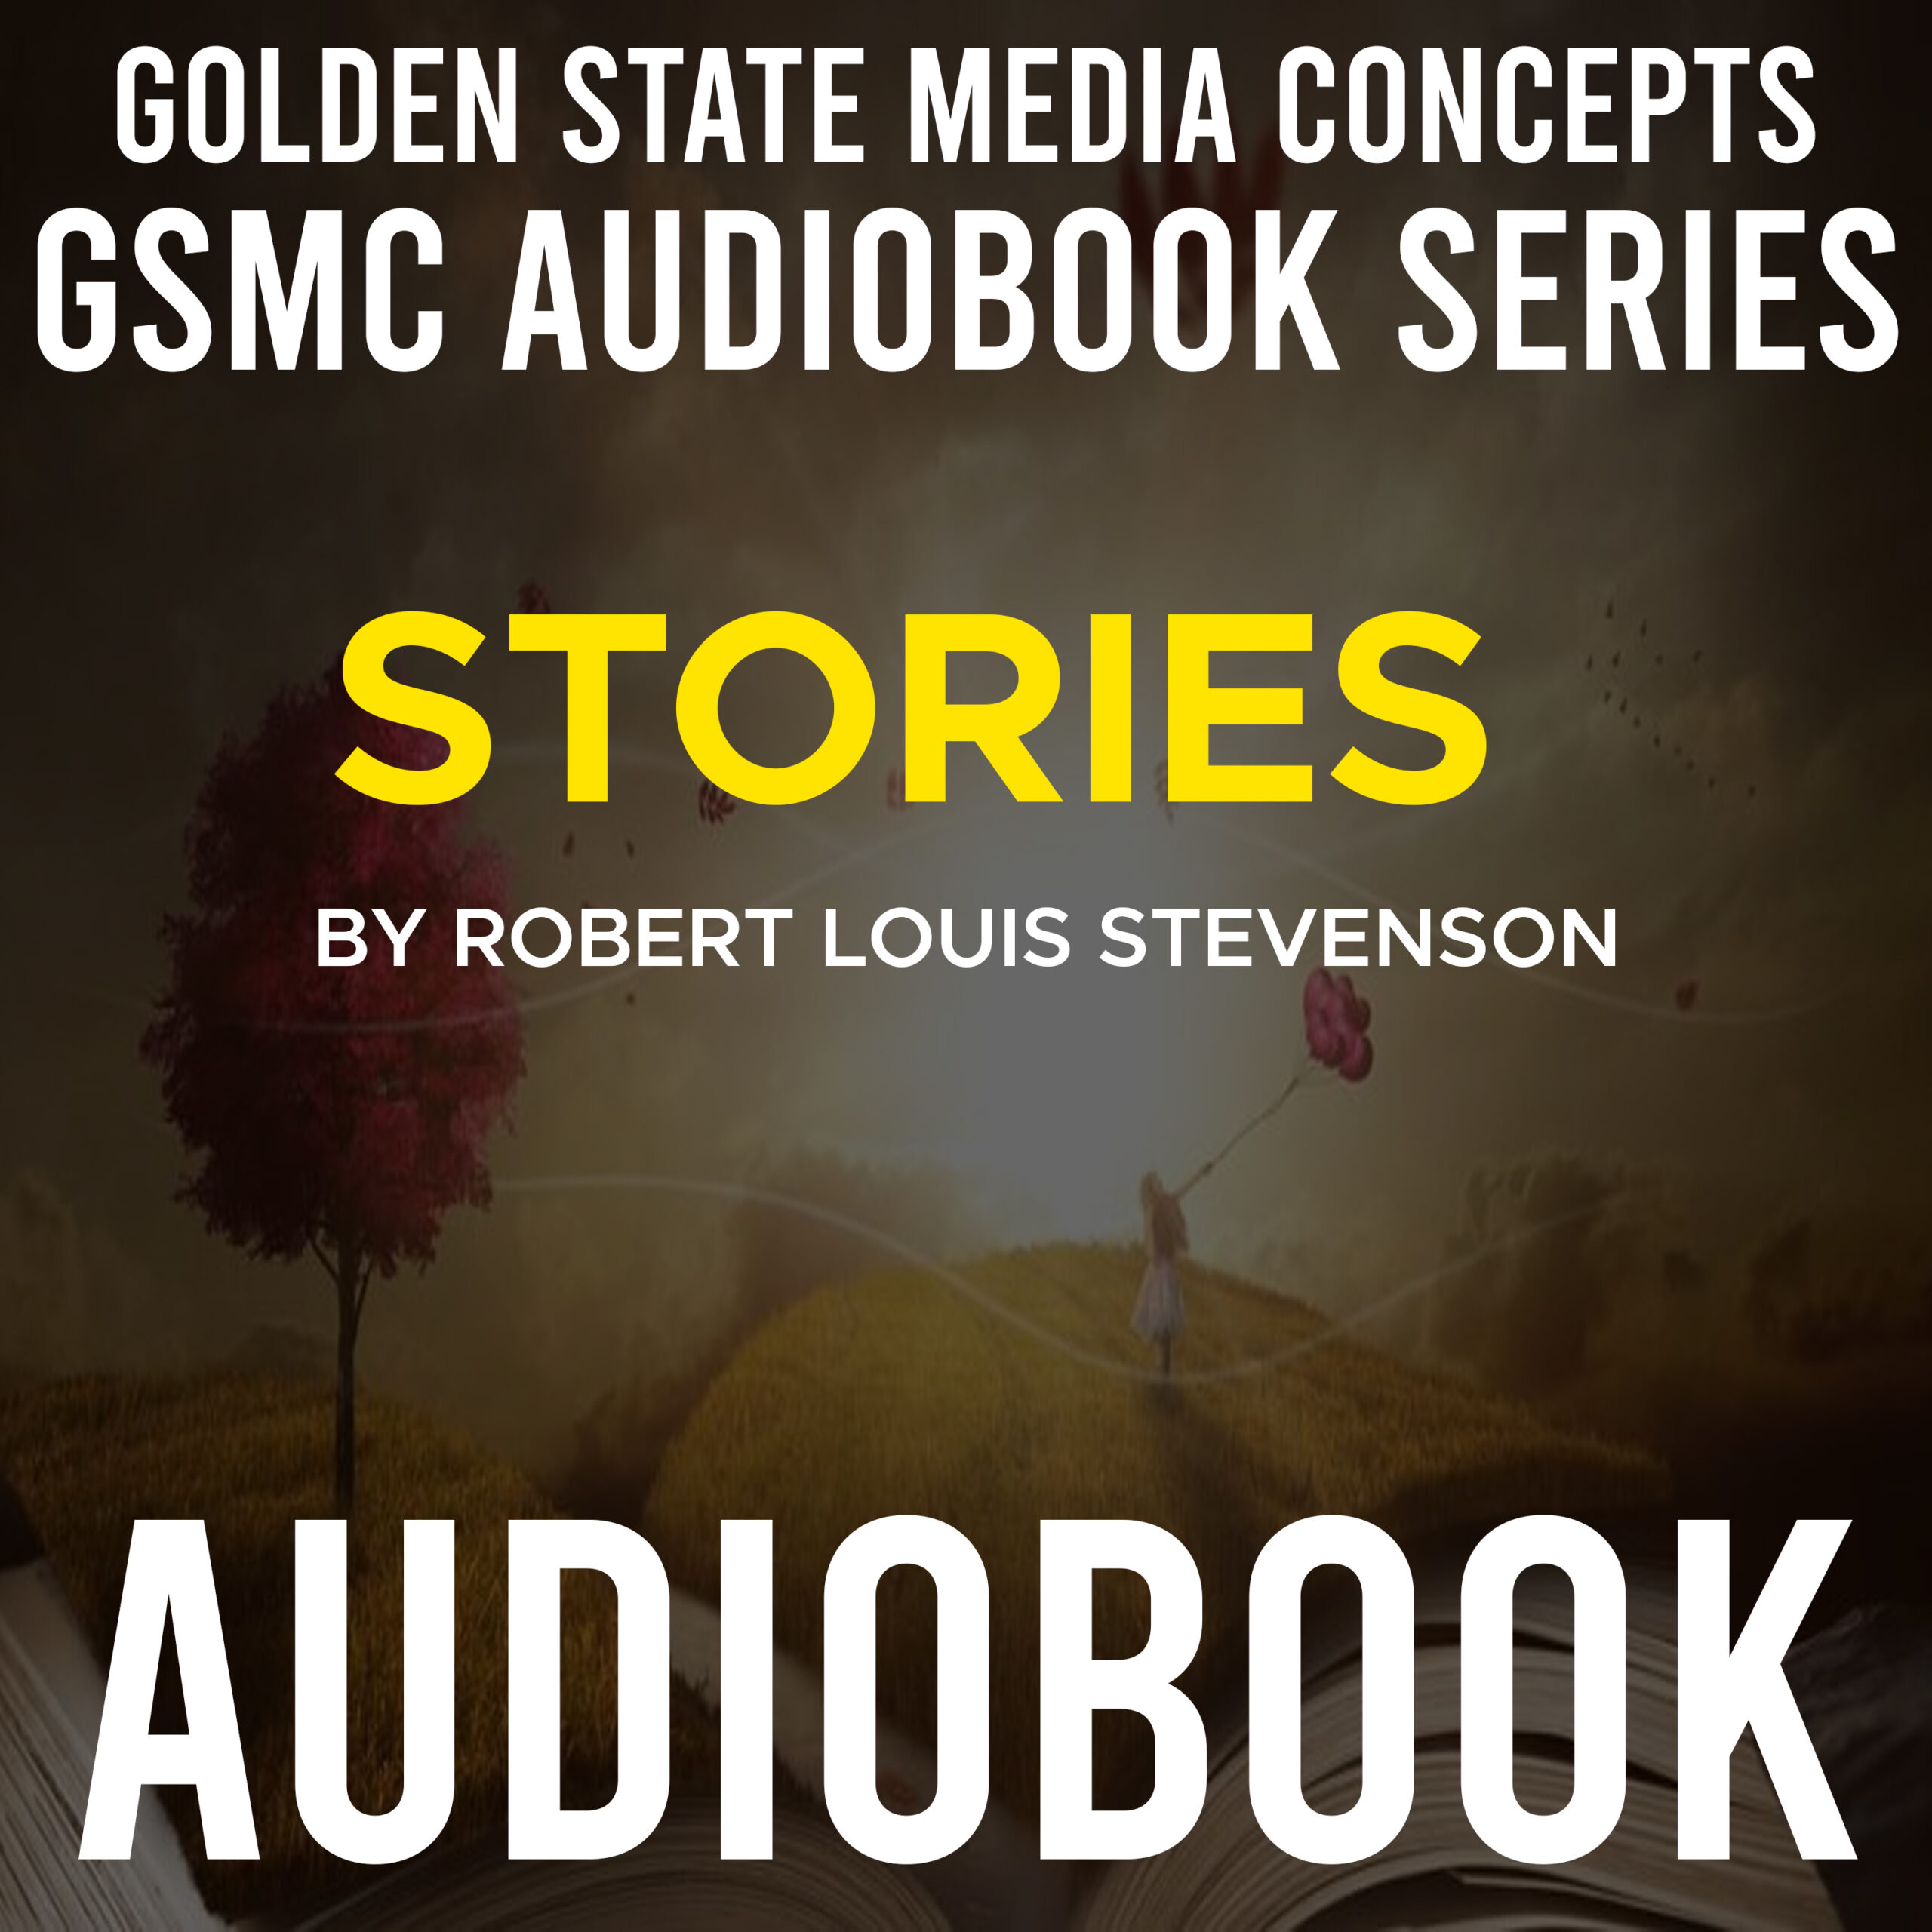 GSMC Audiobook Series: Stories by Robert Louis Stevenson